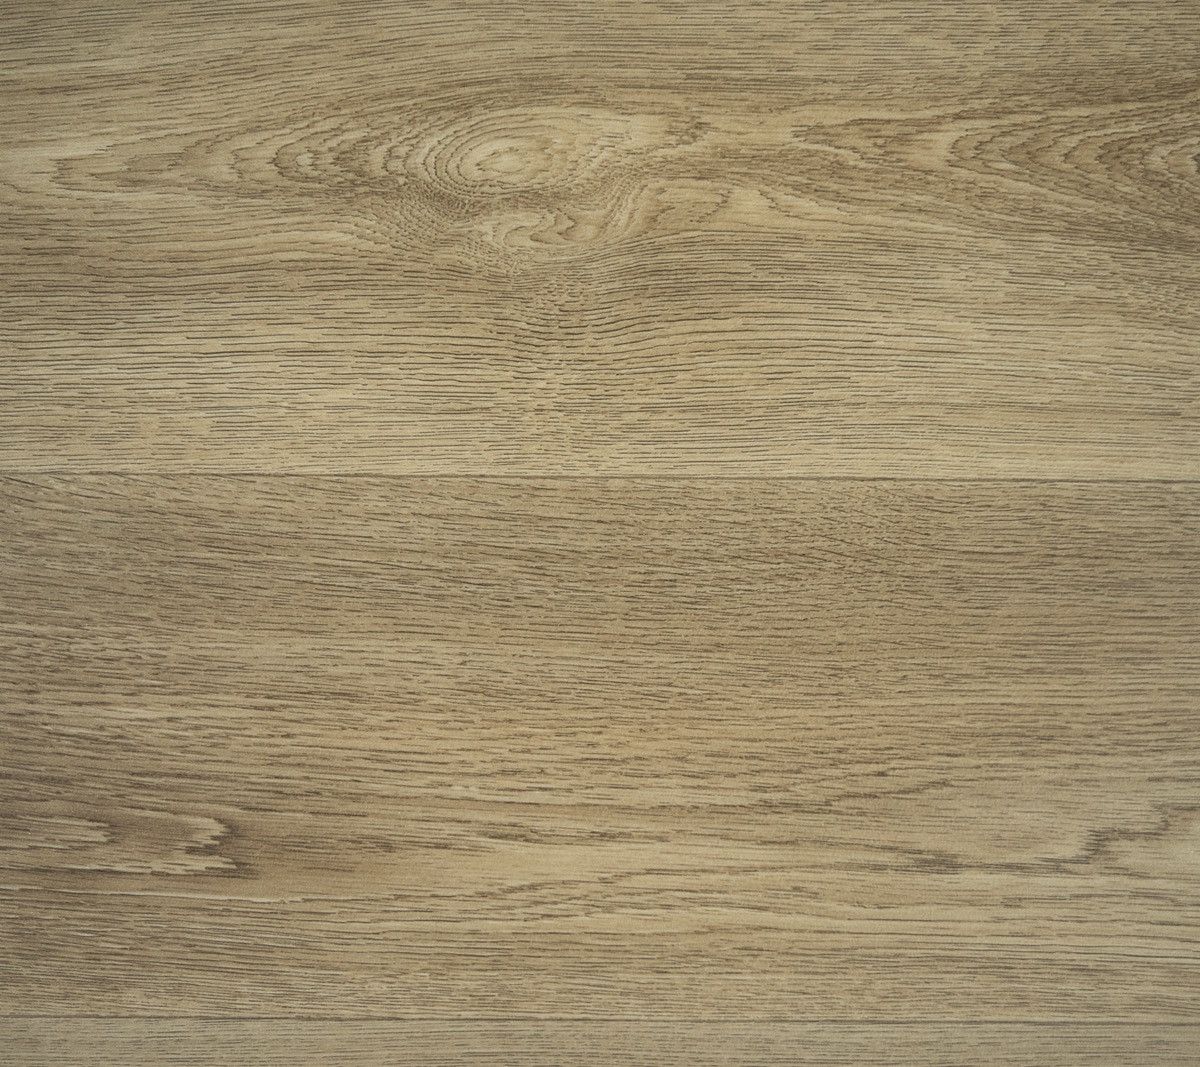 Beauflor PVC podlaha Blacktex Columbian Oak 636L - Rozmer na mieru cm